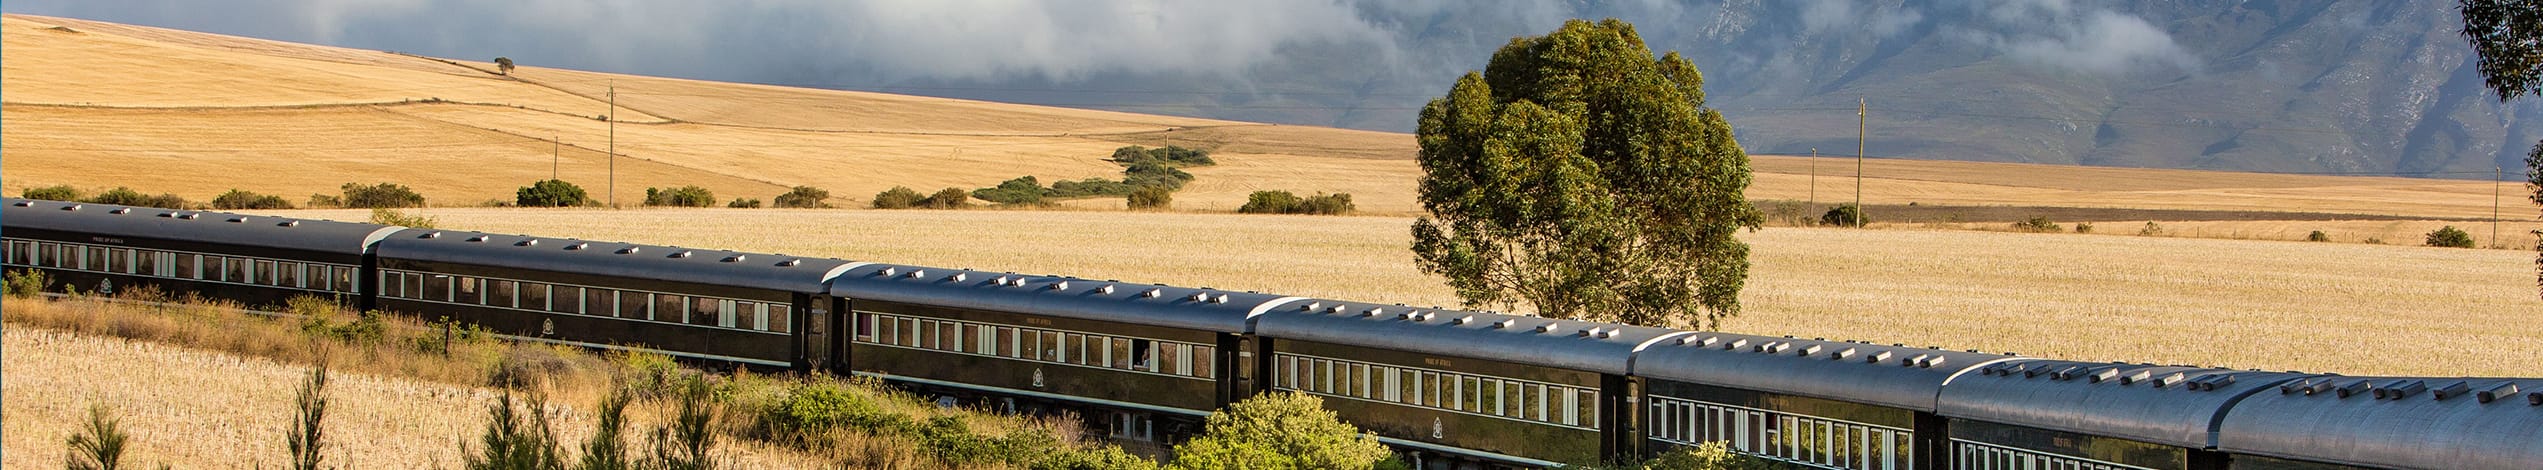 Sydafrika, Train